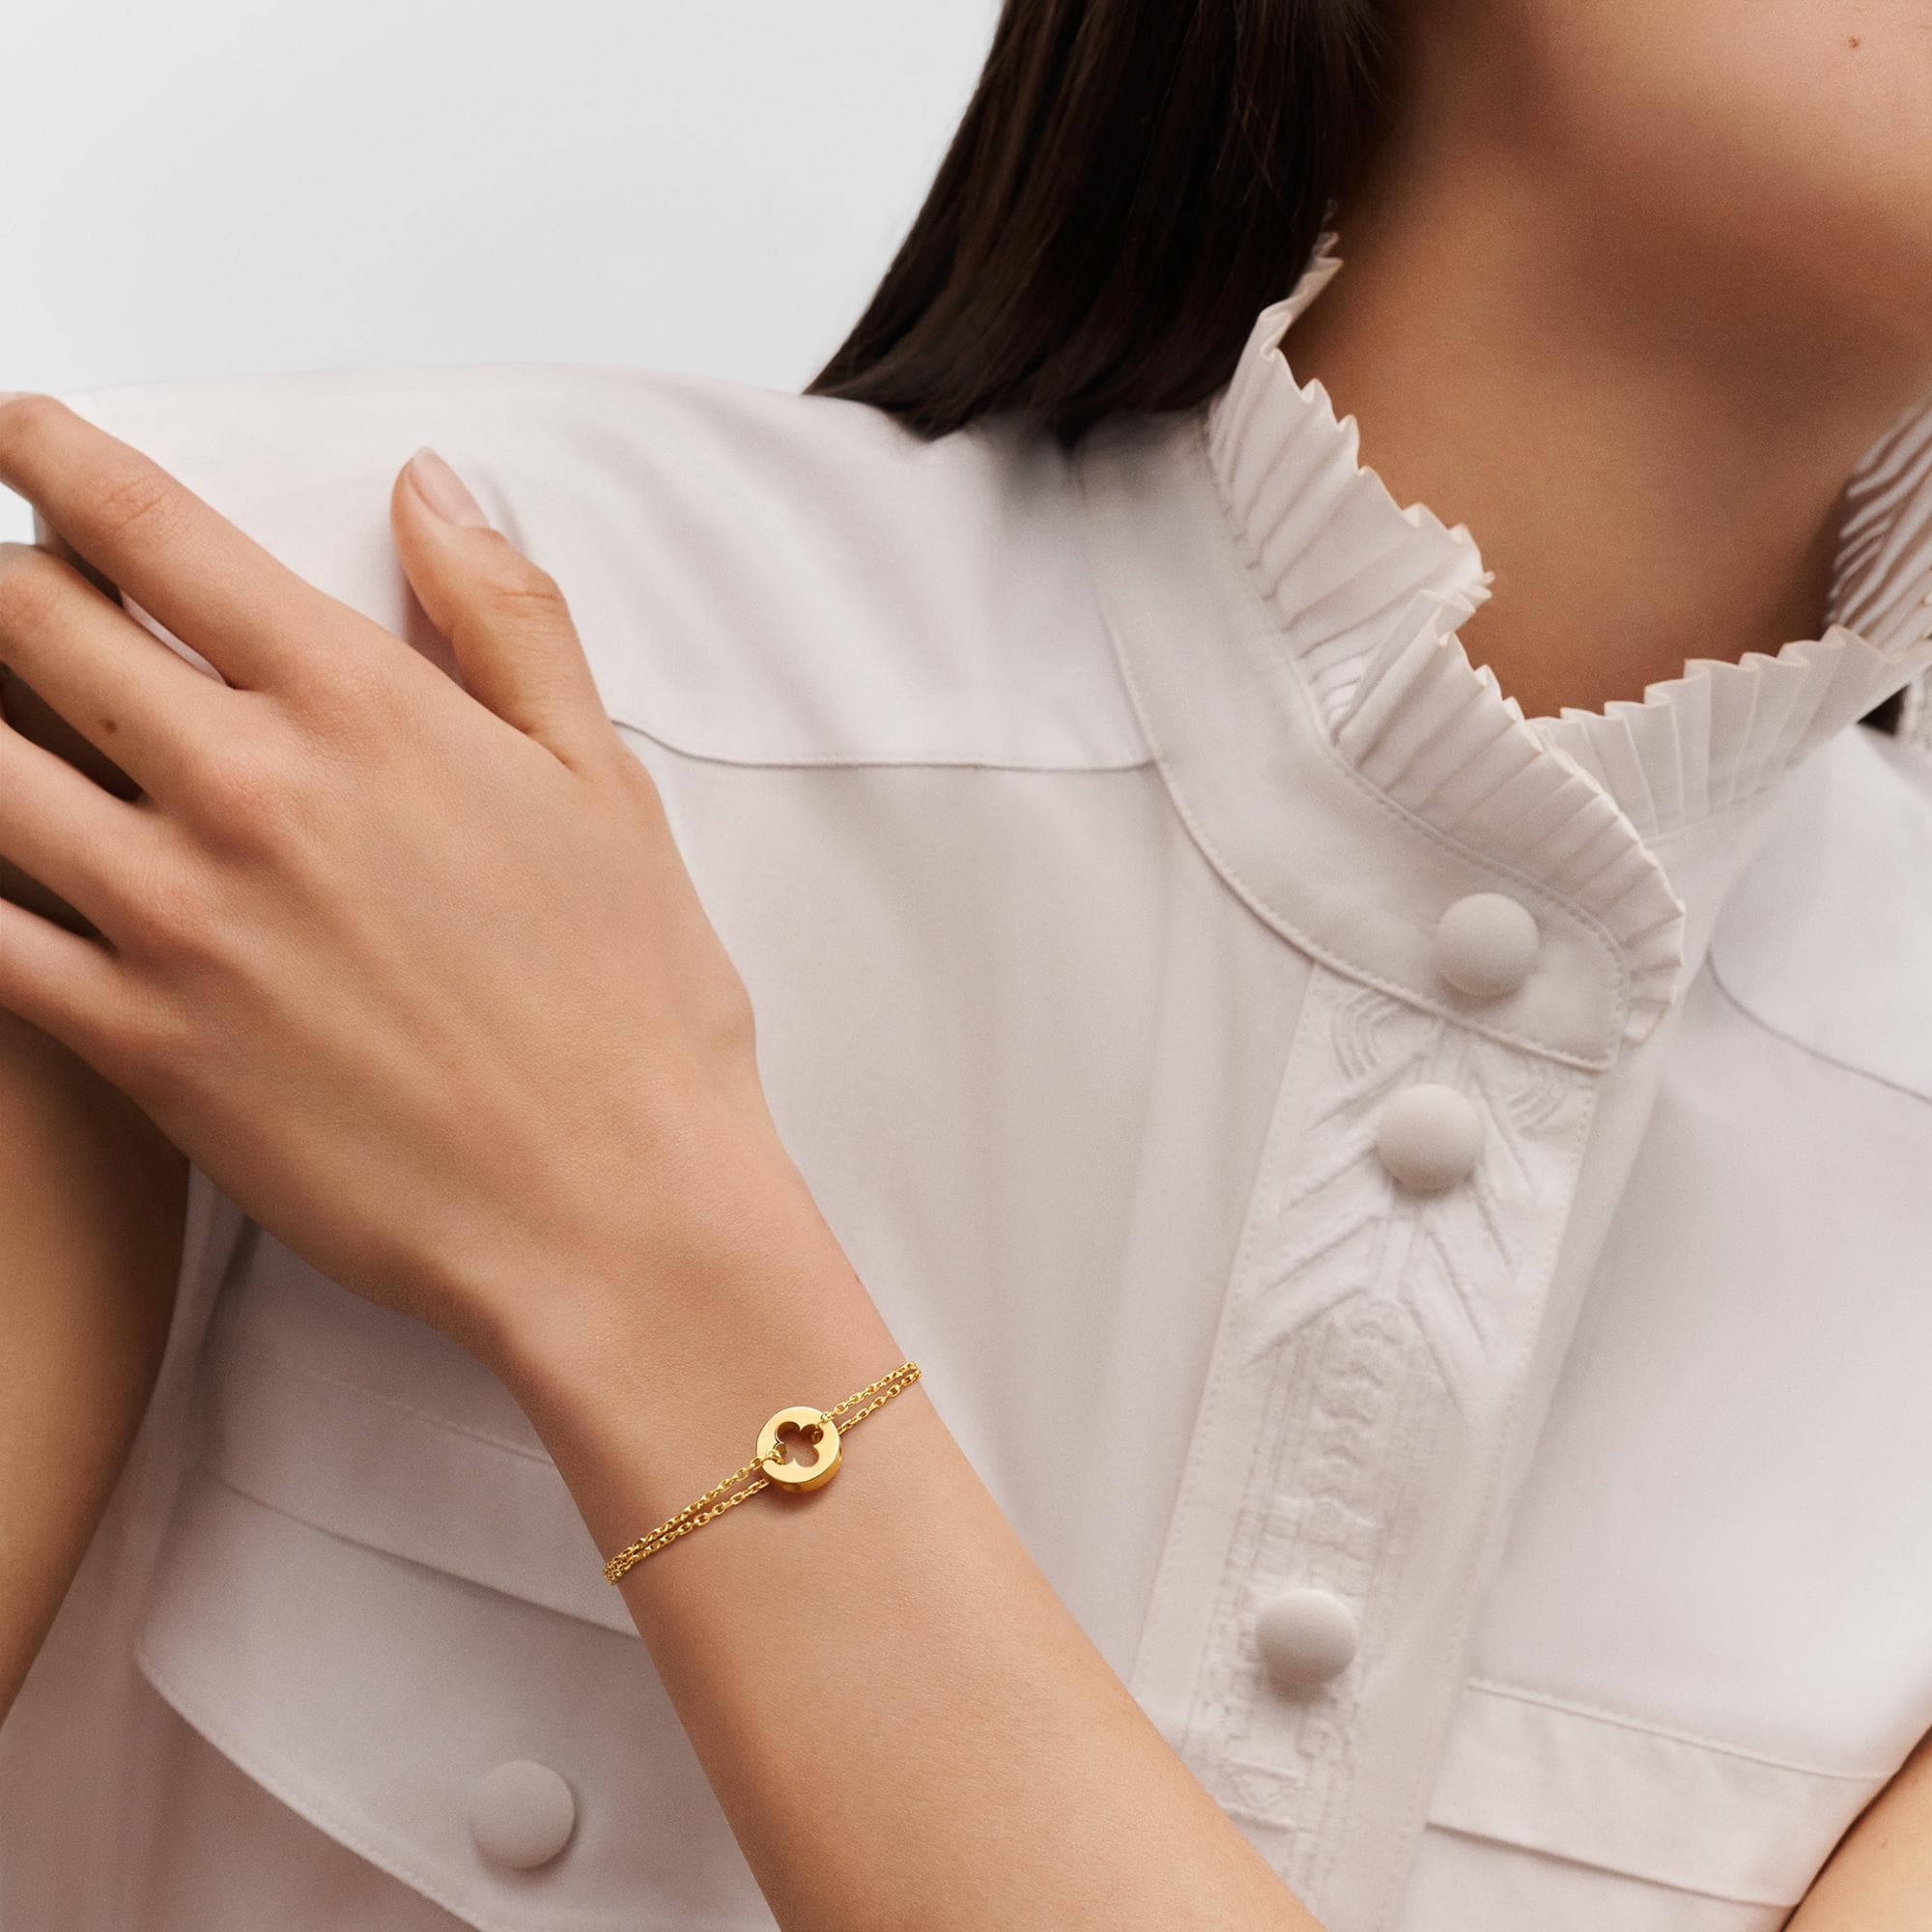 Louis Vuitton EMPREINTE CHAIN BRACELET, YELLOW GOLD – Jewelry – Categories Q95619